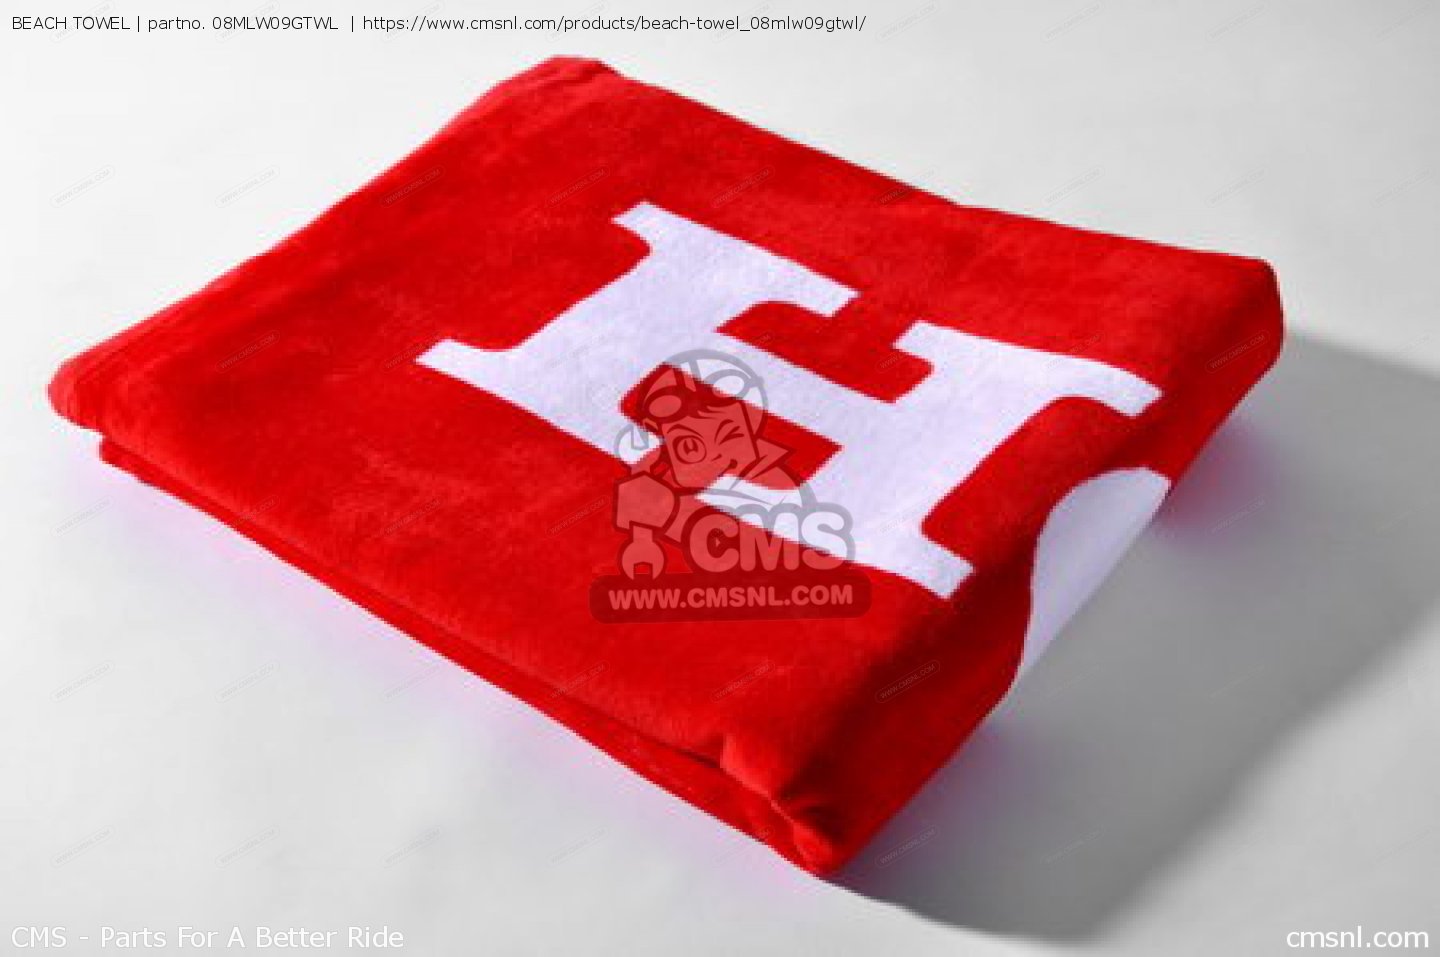 Honda merchandise towel #4